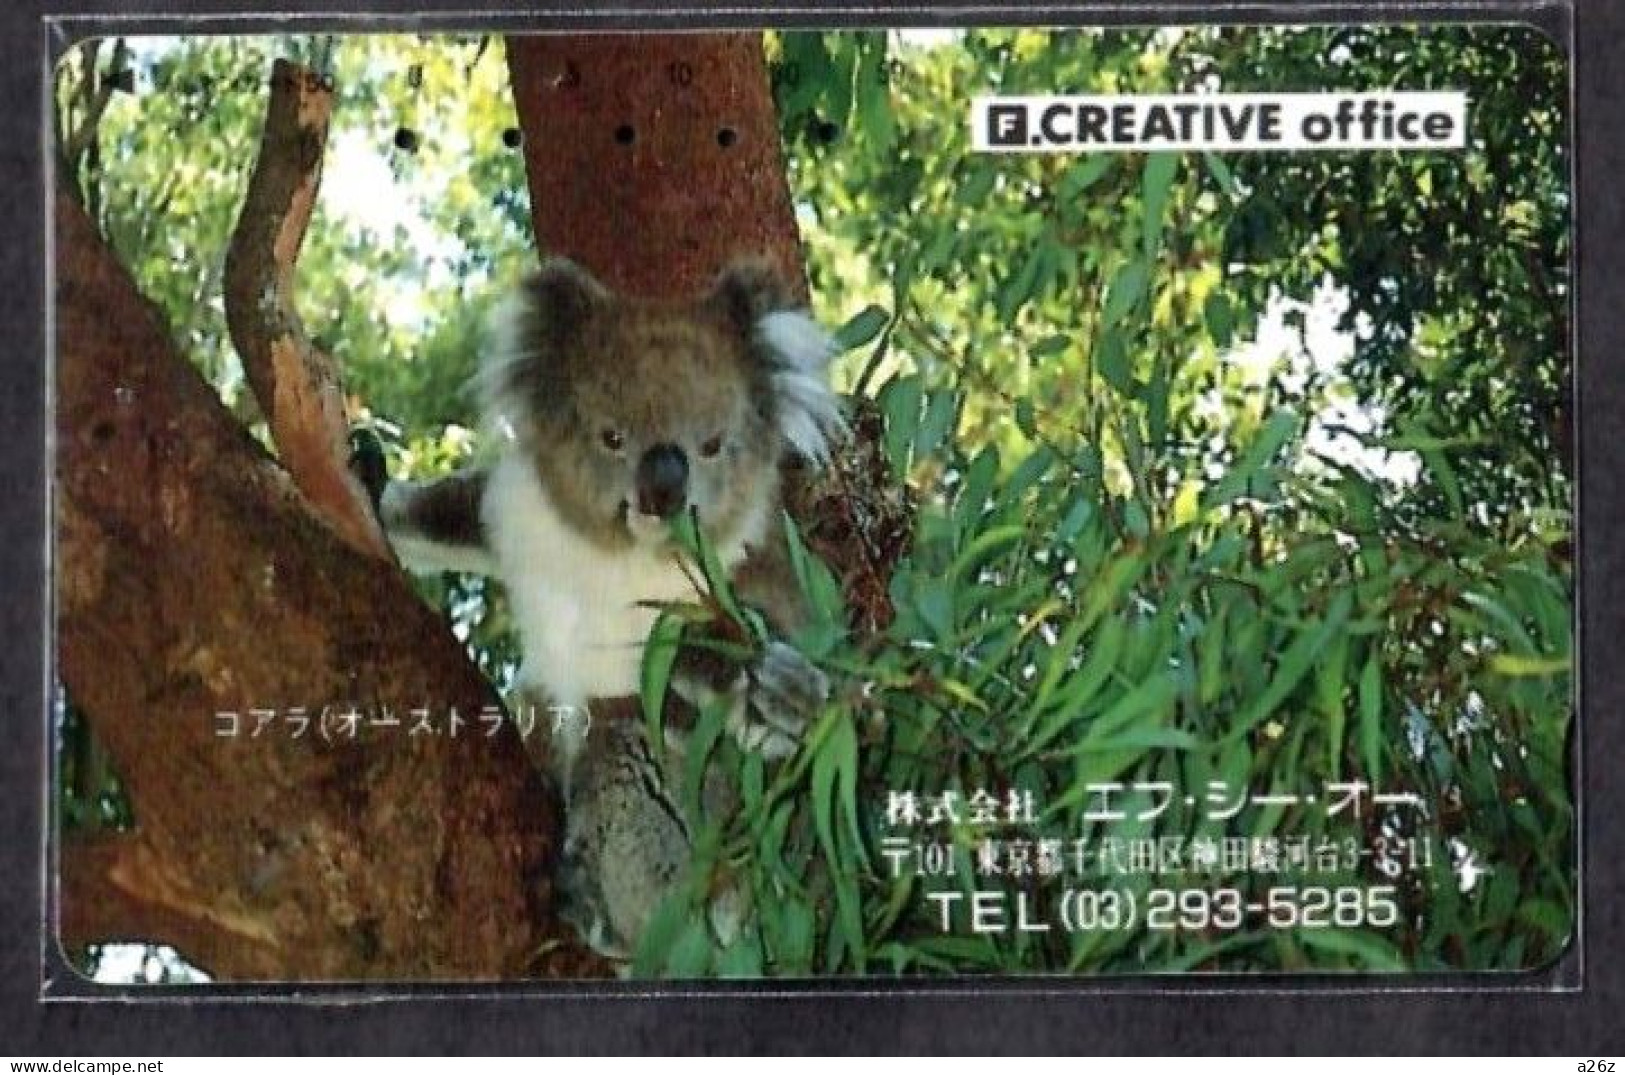 Japan 1V Koala F. Creative Office Advertising Used Card - Giungla